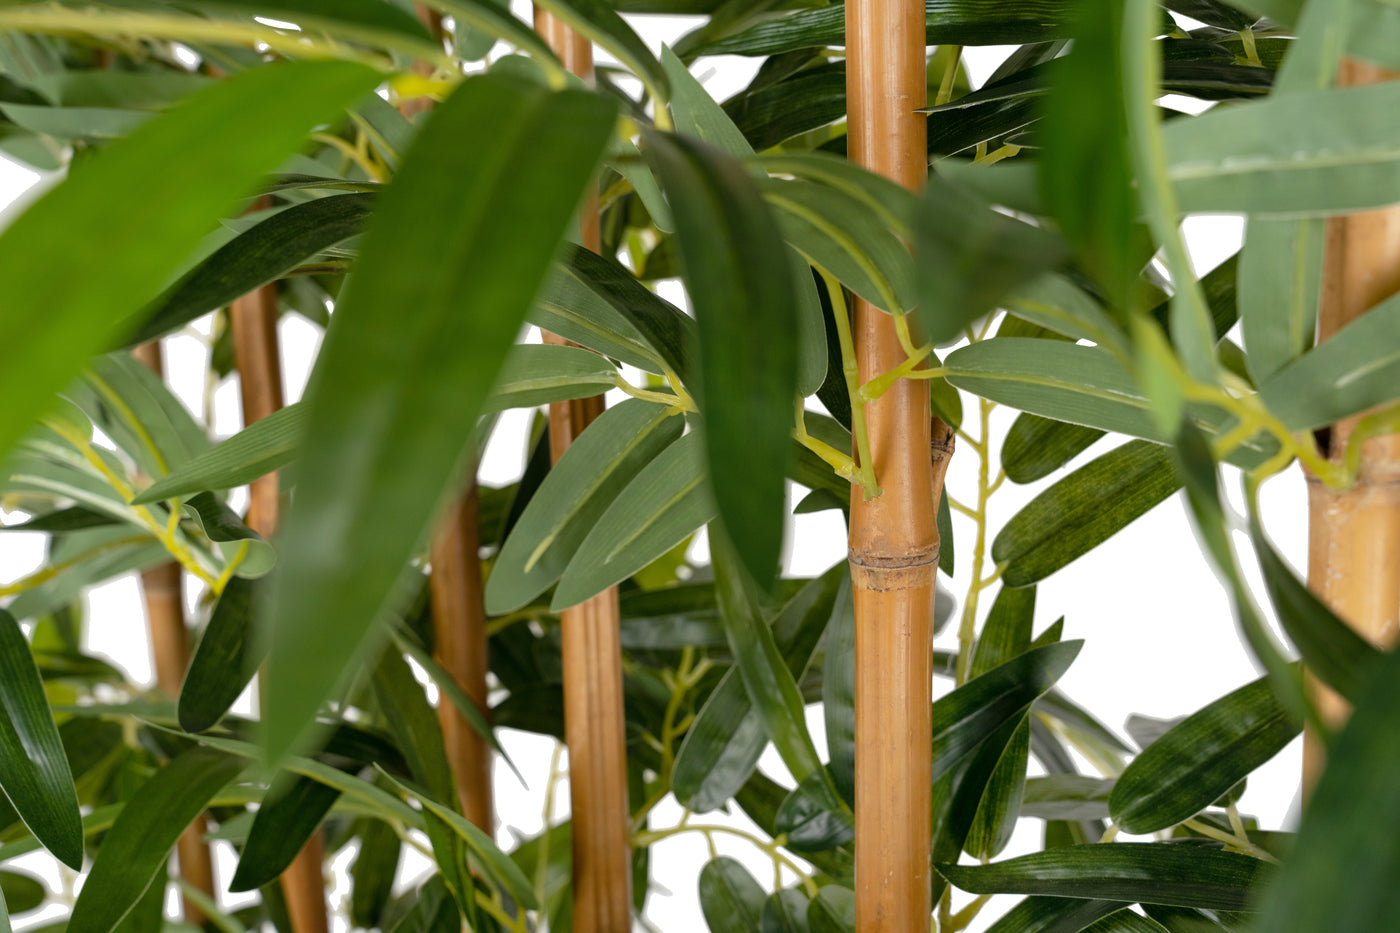 Gard artificial din Bambus H150cm cu lungime 100cm cu protectie UV